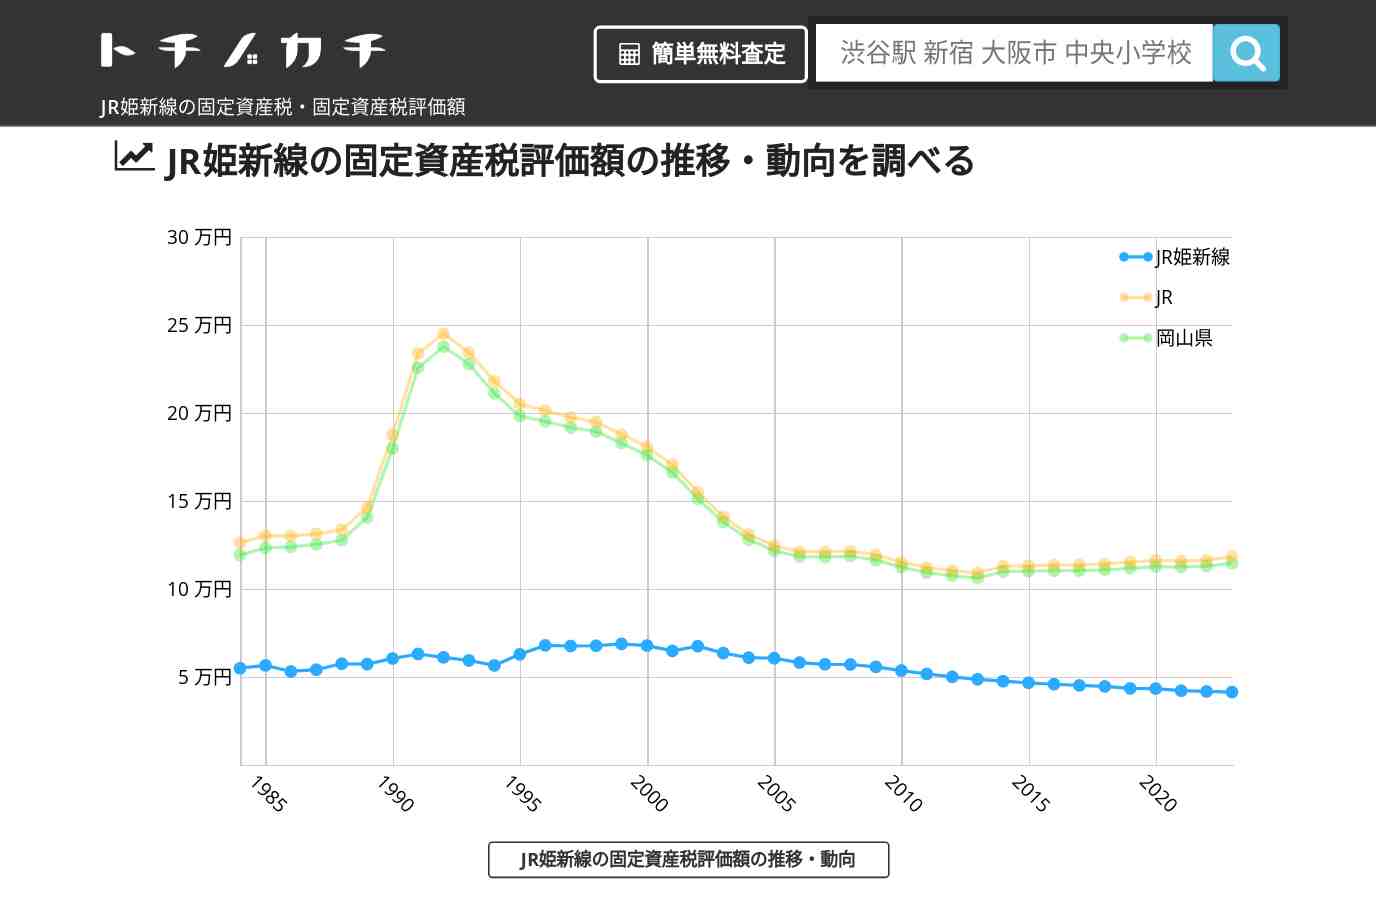 JR姫新線(JR)の固定資産税・固定資産税評価額 | トチノカチ